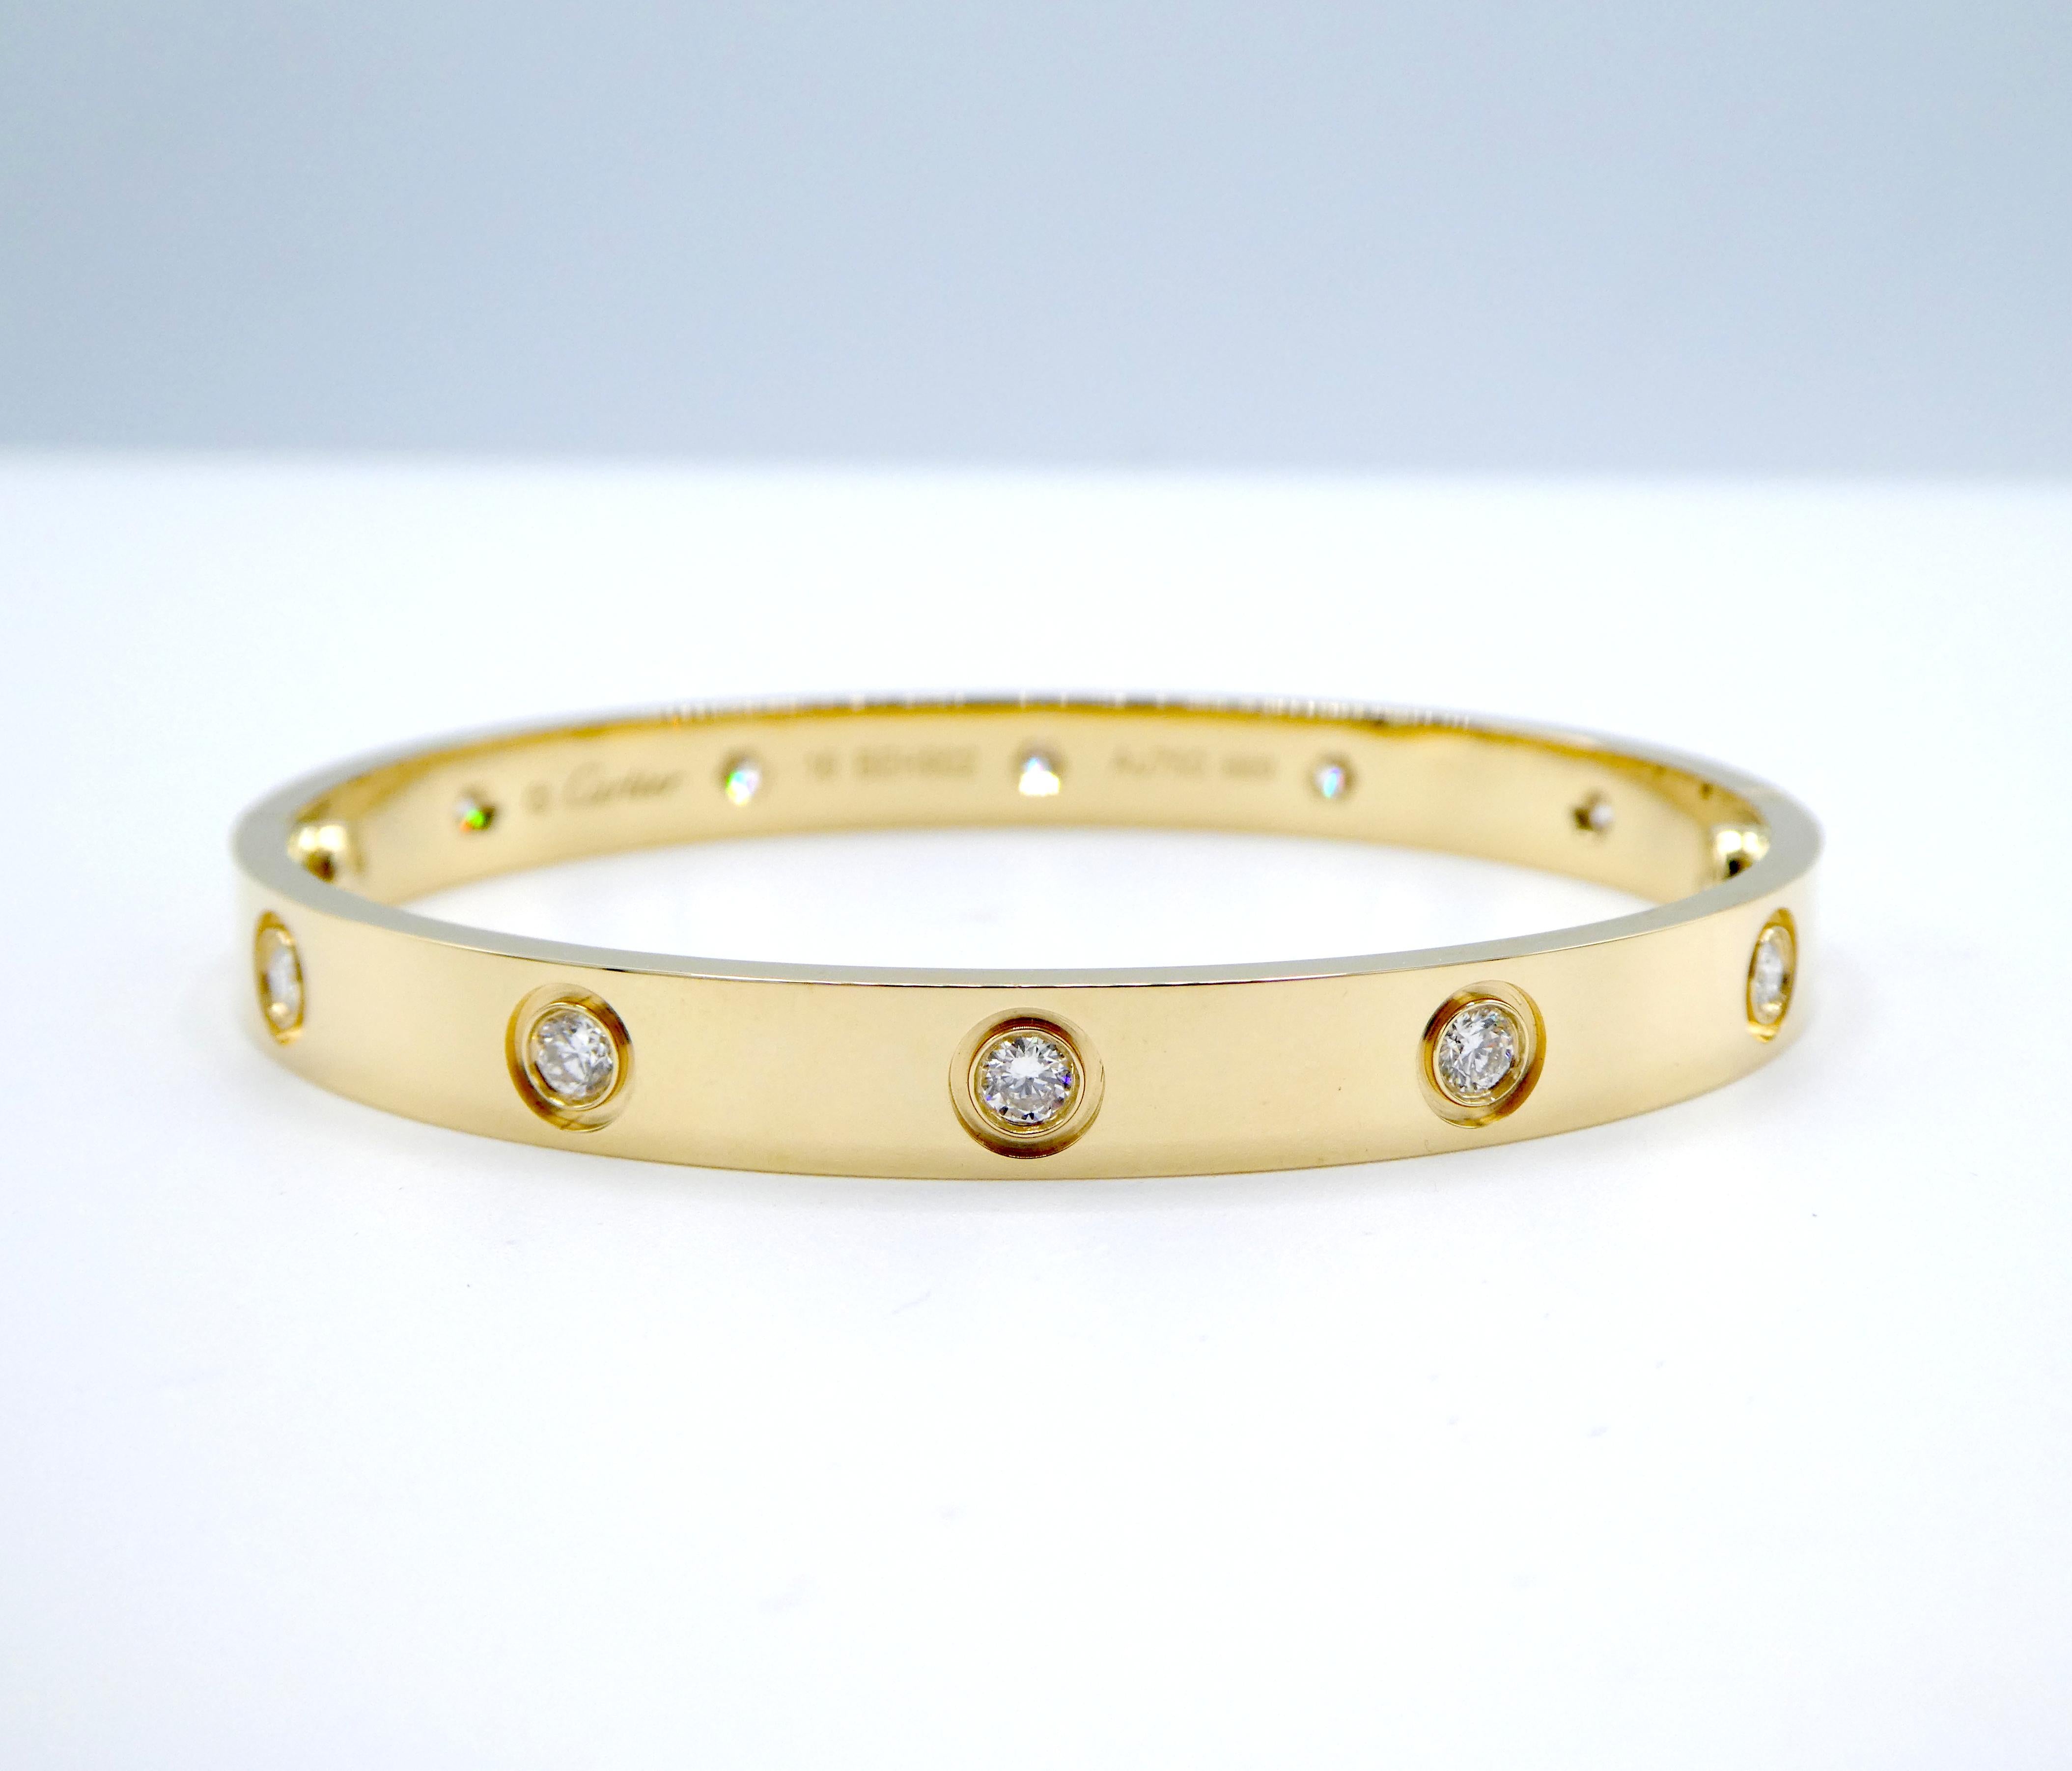 Cartier Love Bracelet 10 Diamonds 18 Karat Yellow Gold Bangle Size 16 Estate

Designer: Cartier
Metal: 18k yellow gold
Weight: 30.17 grams
Size 16
Width: 6.1mm
Diamonds: 10 round brilliant cut diamonds 0.96ctw F-G VS
Signed 